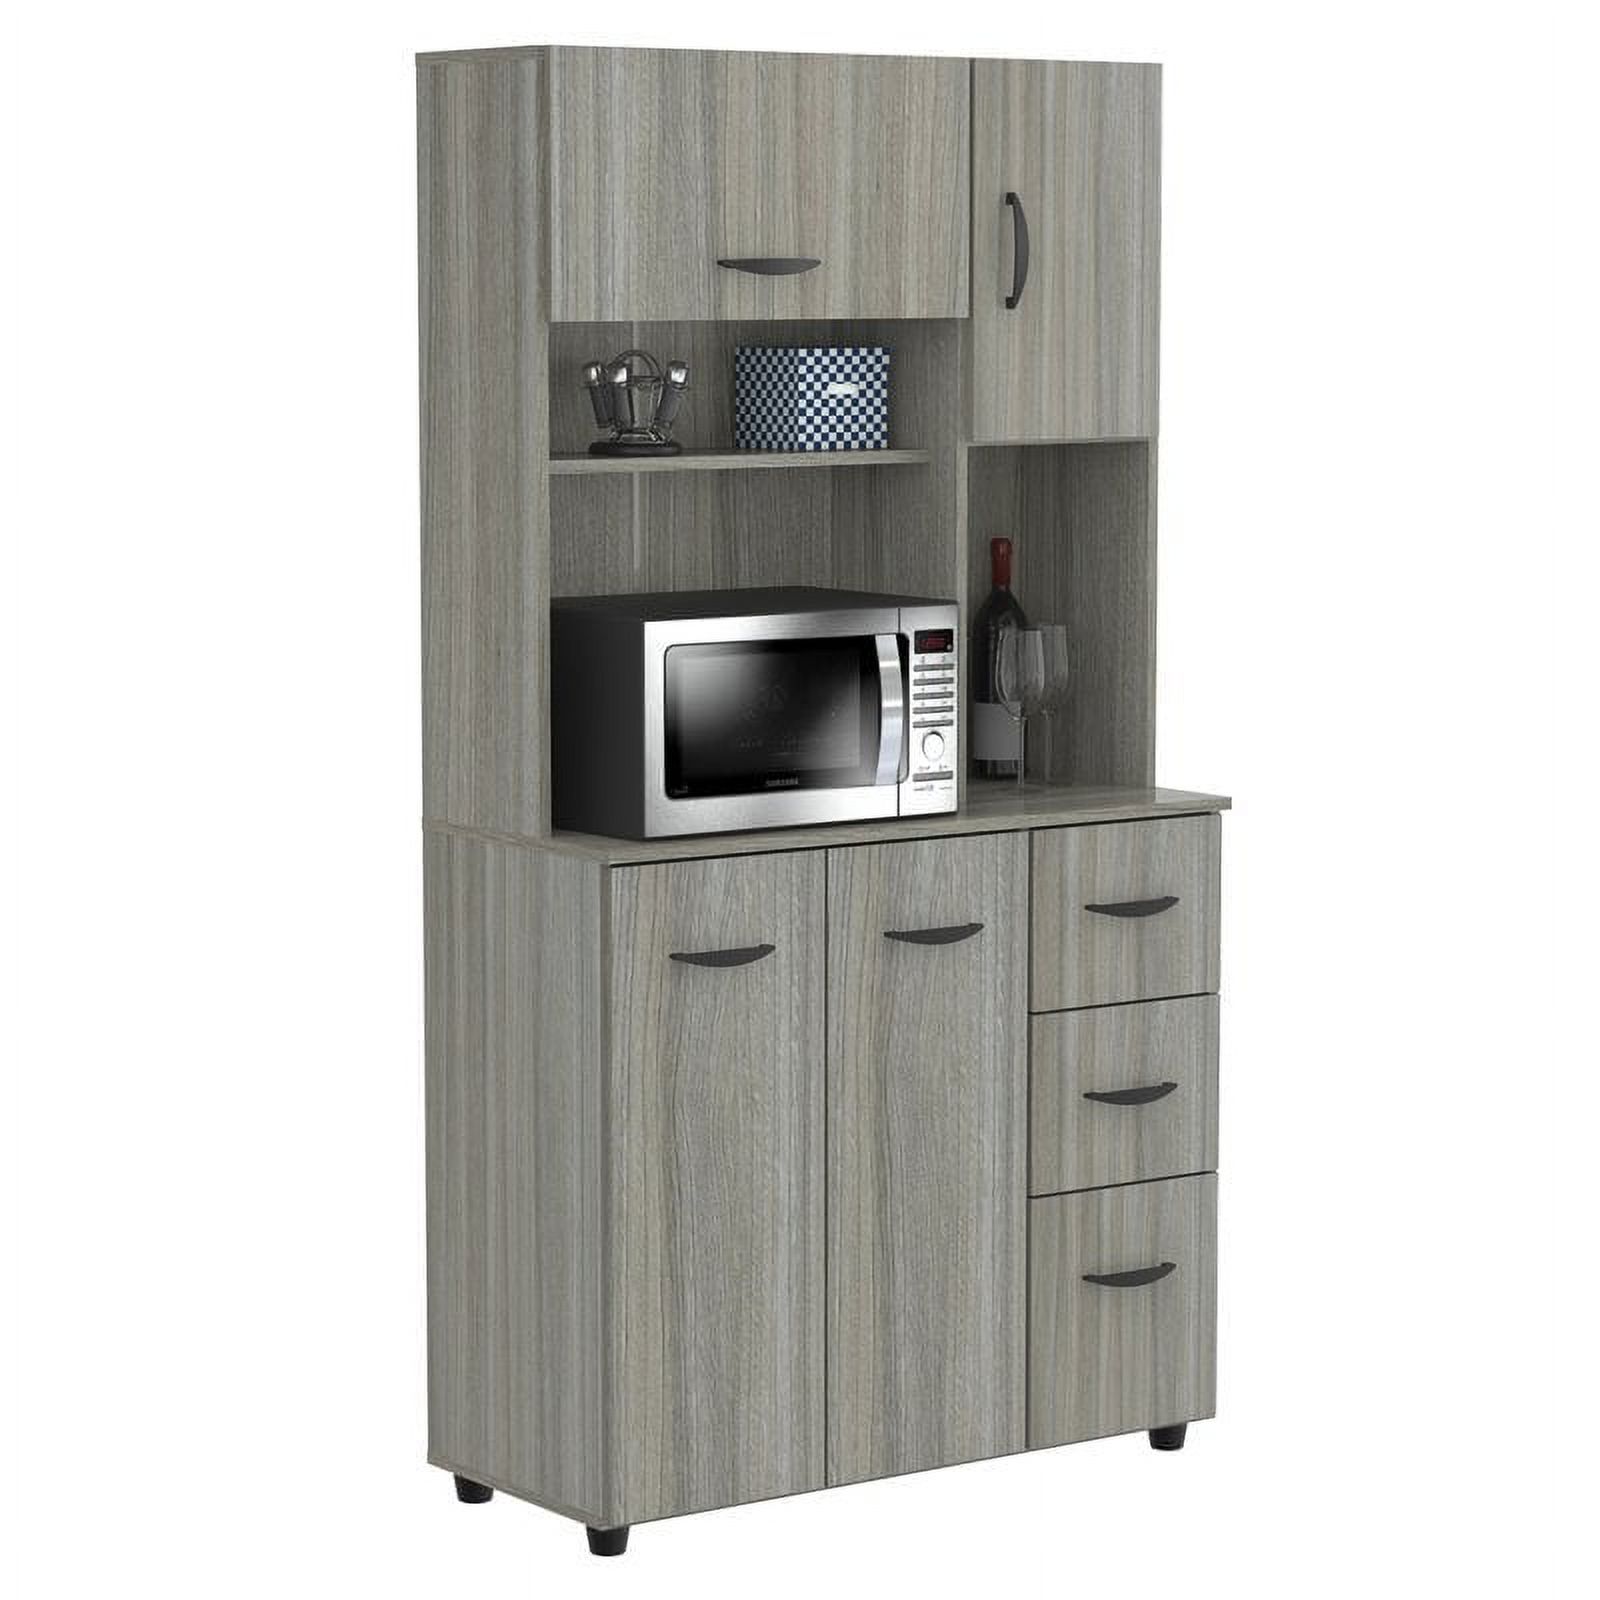 Inval Laminate Kitchen Microwave Storage Cabinet, Smoke Oak - image 1 of 8